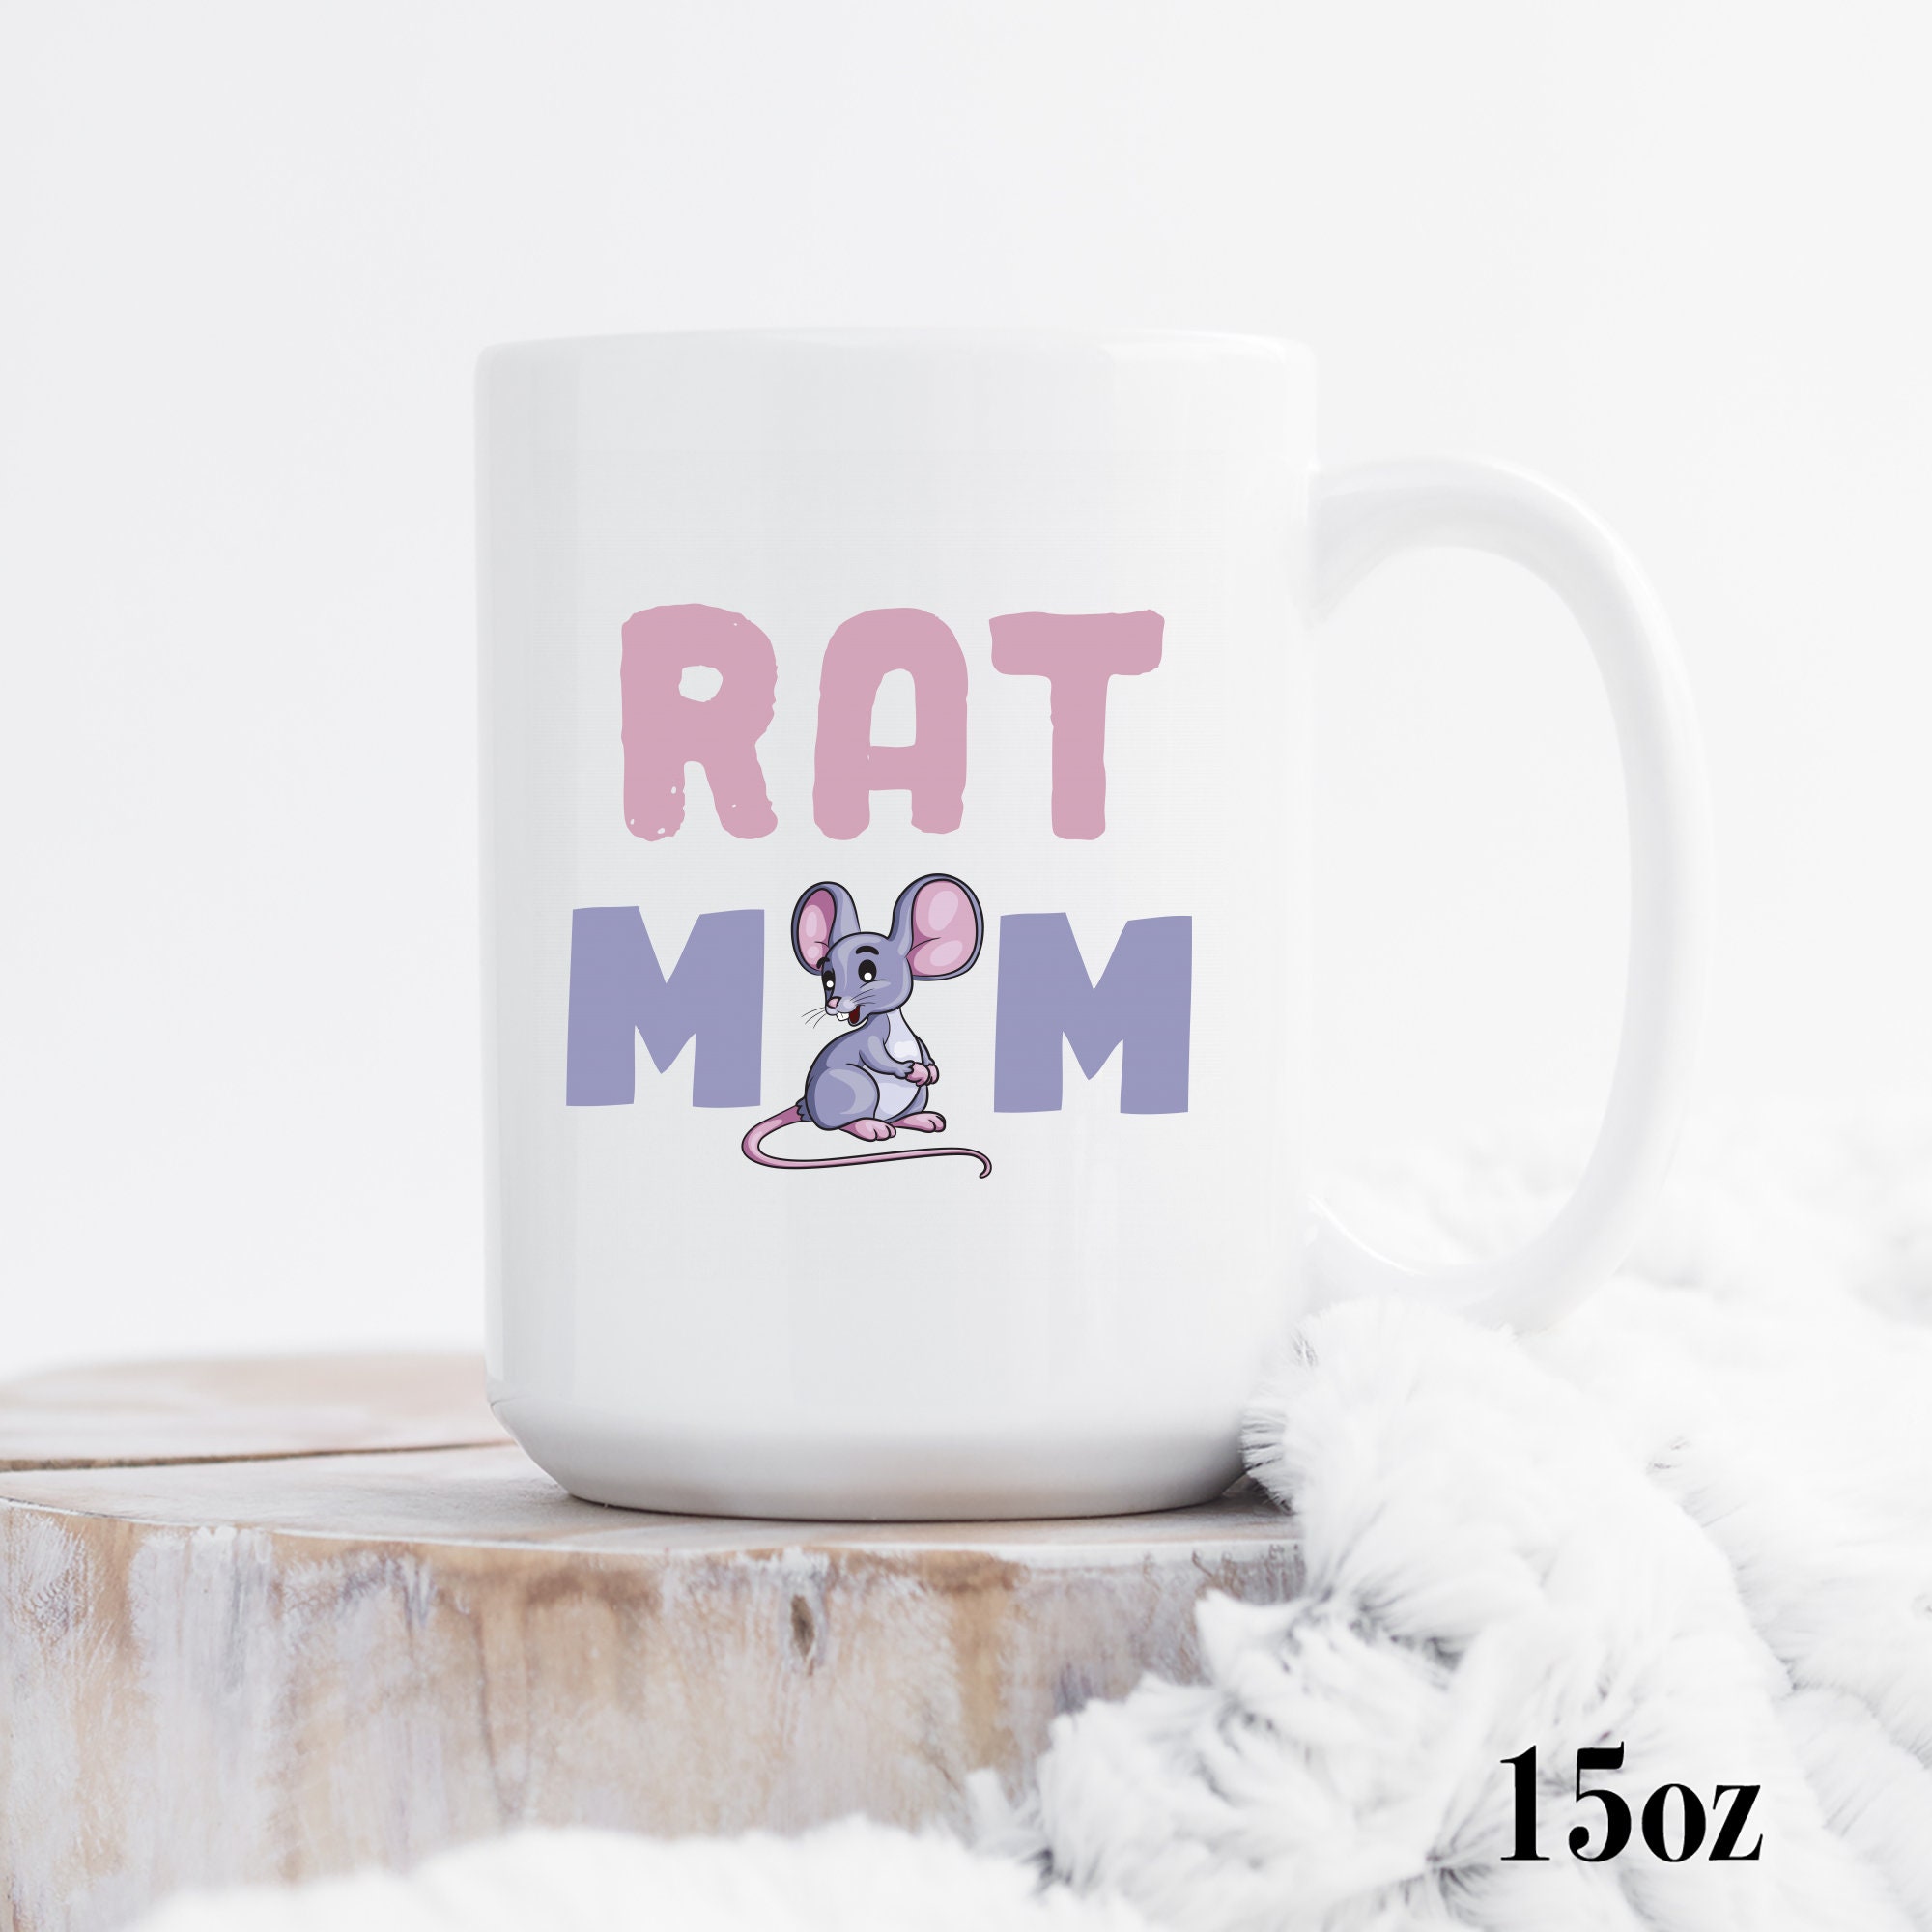 Rat I Love NYC  Mug  Rat Mug  Rat Gift  Rat Lover Mug  Funny Rat Mug  Rat Coffee Mug  New York Mug  New York Gift  NYC Coffee Mug